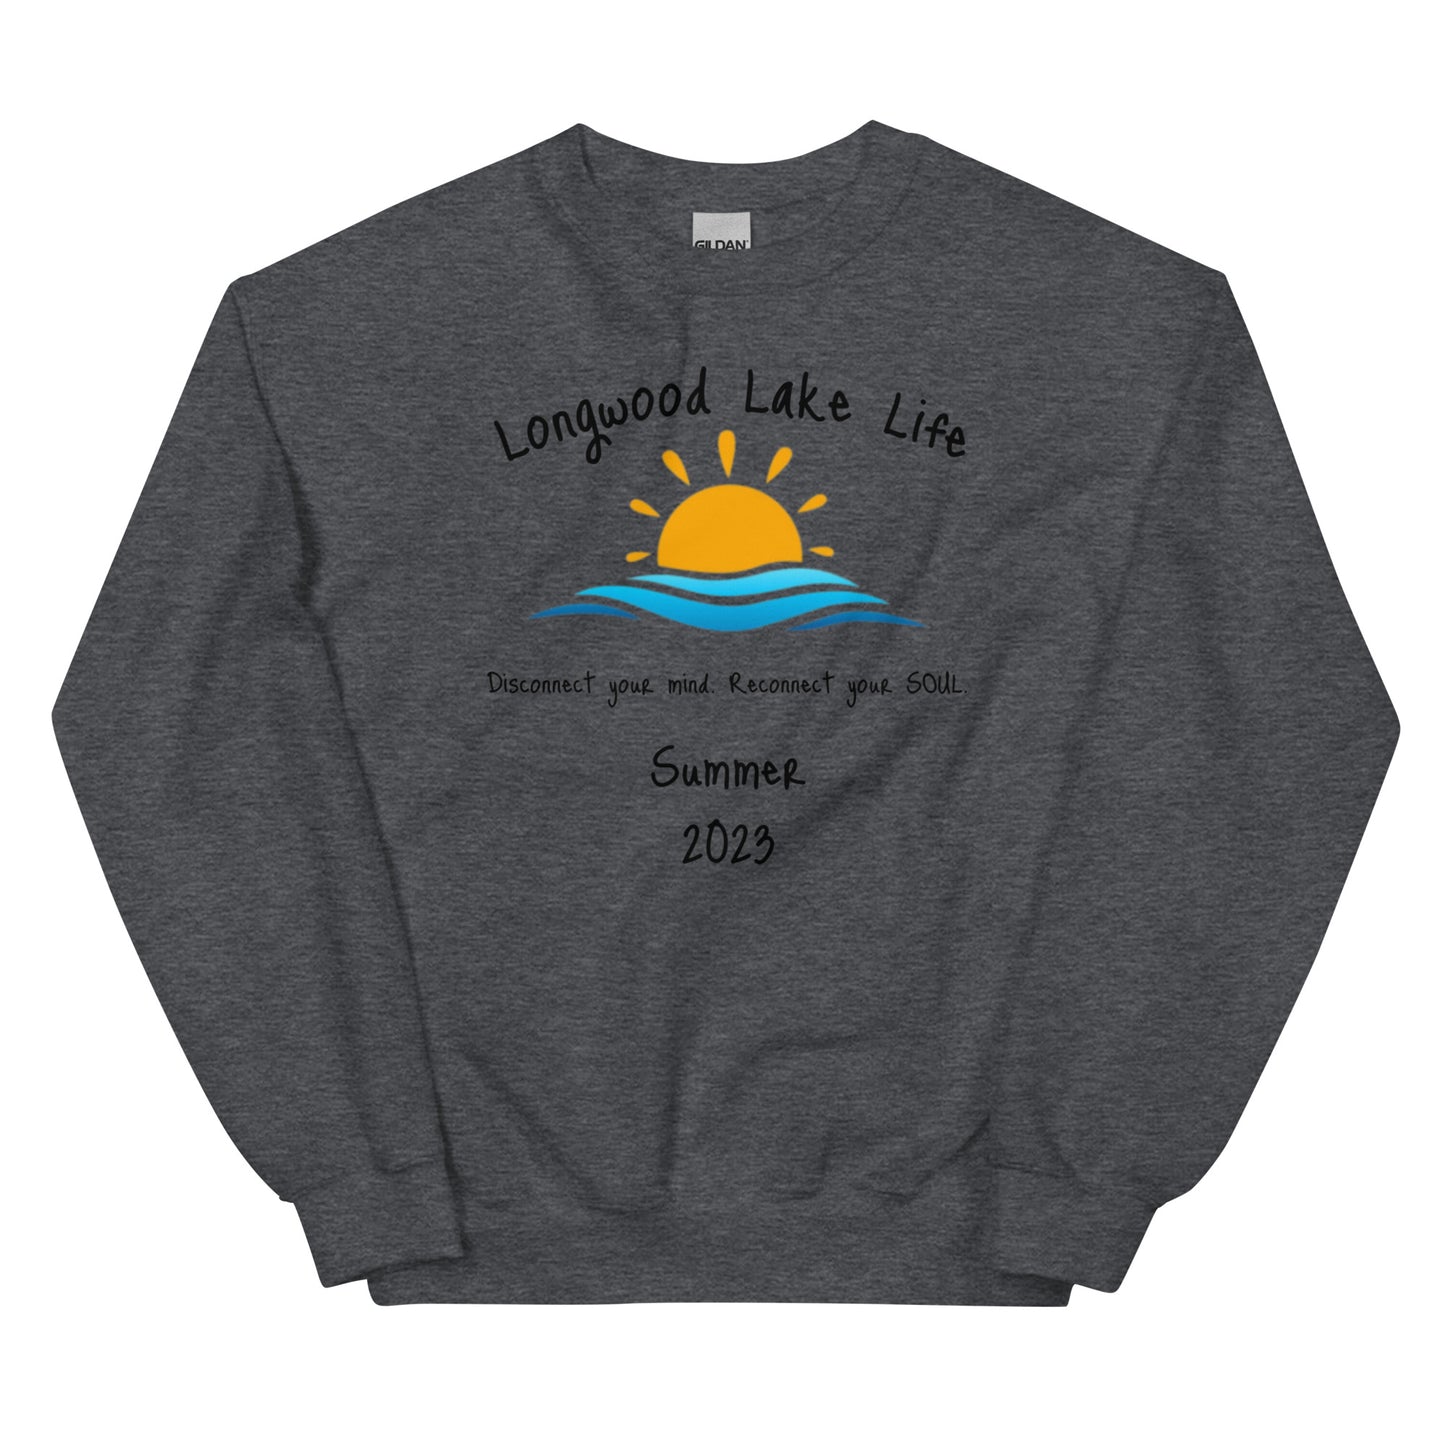 Longwood Lake Summer 2023 Special Edition Unisex Crew Neck Sweatshirt (Black lettering)